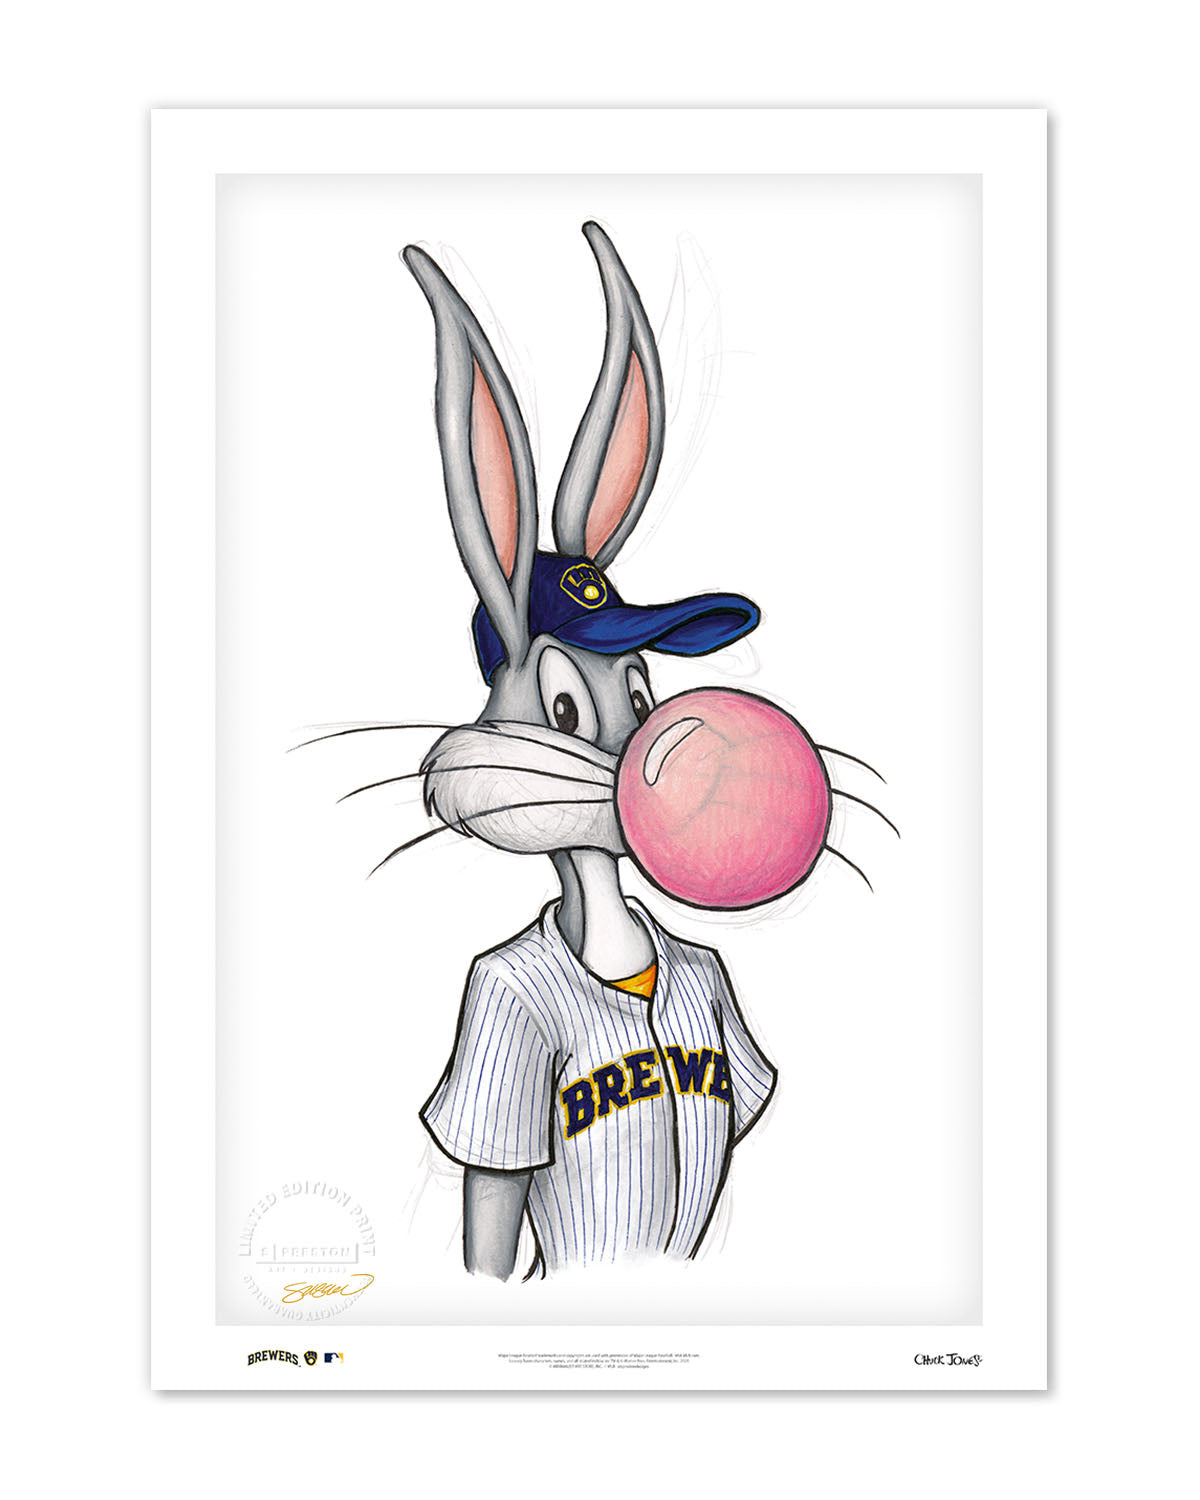 Customize Your Milwaukee Brewers Bugs Bunny Jersey!